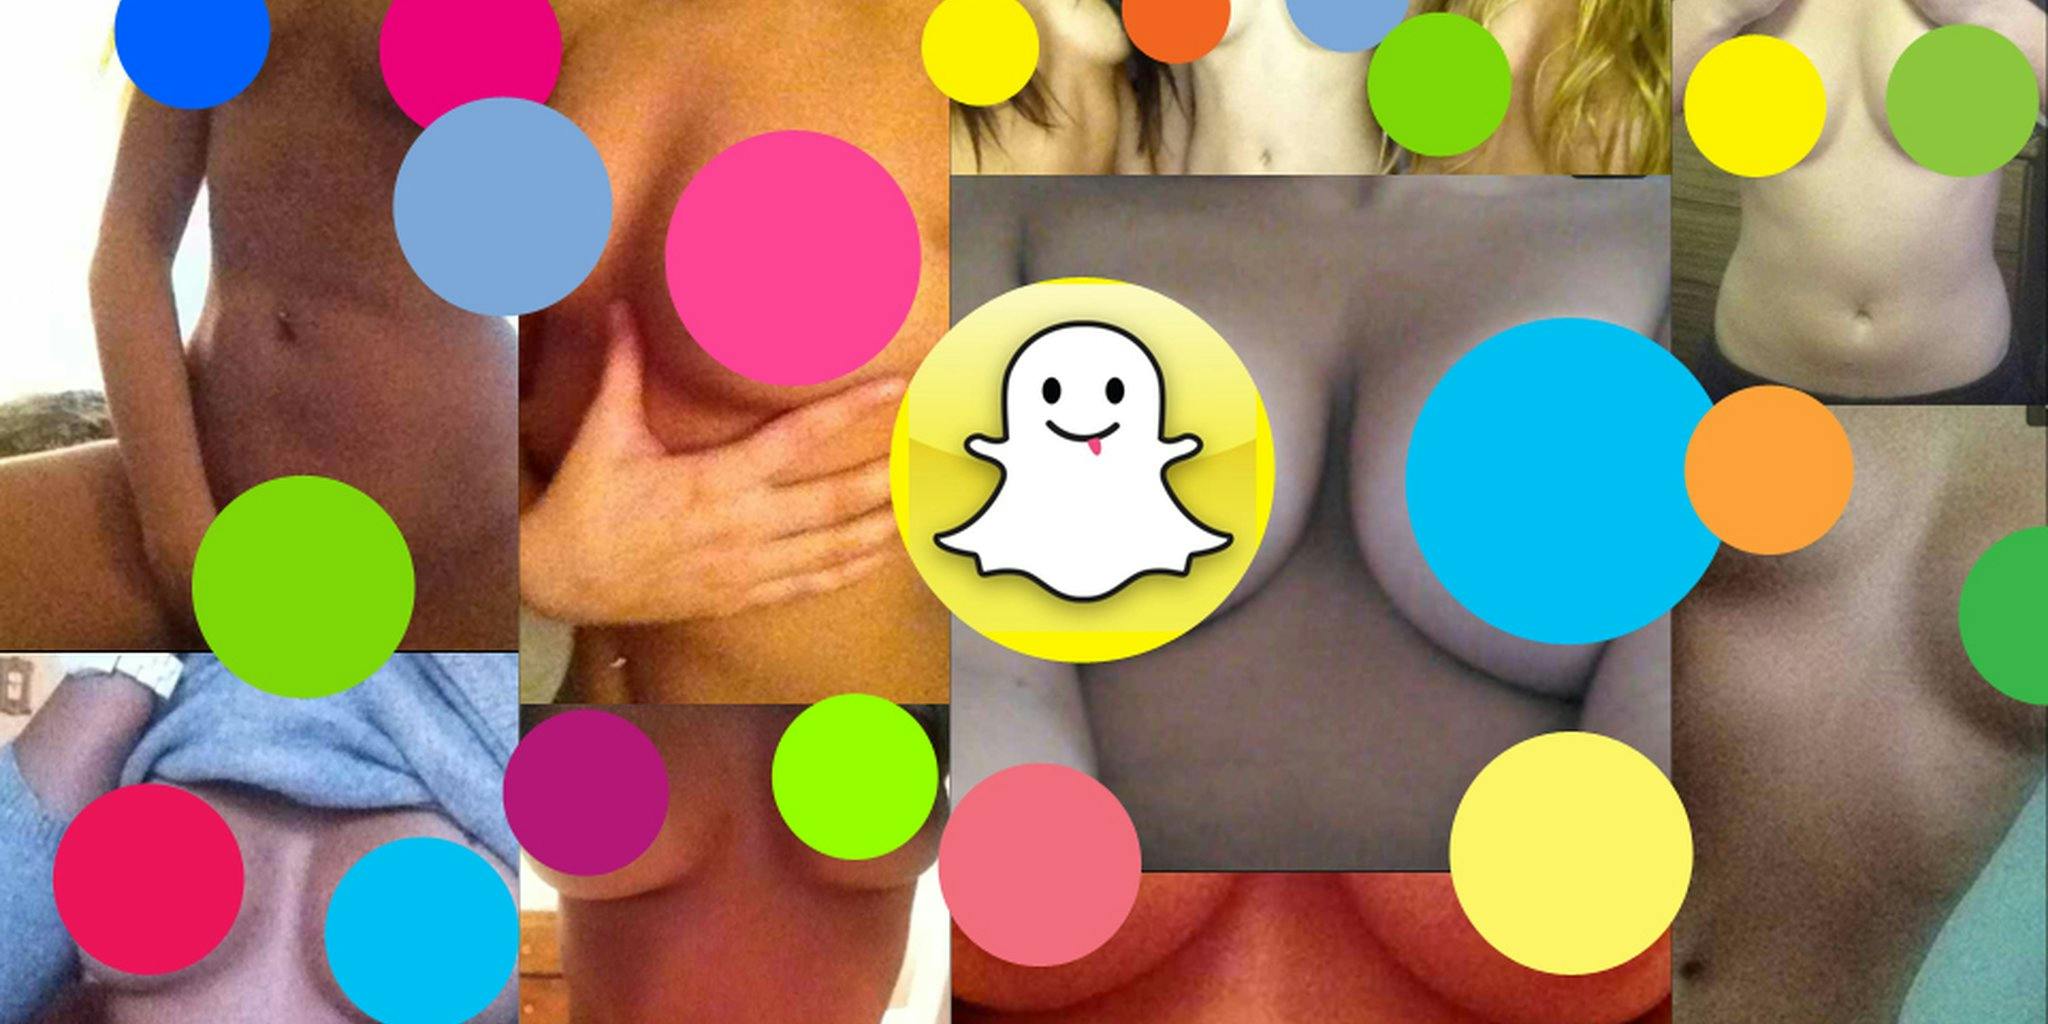 “Snapchat Sluts” shows why Snapchat isn’t consequence-free